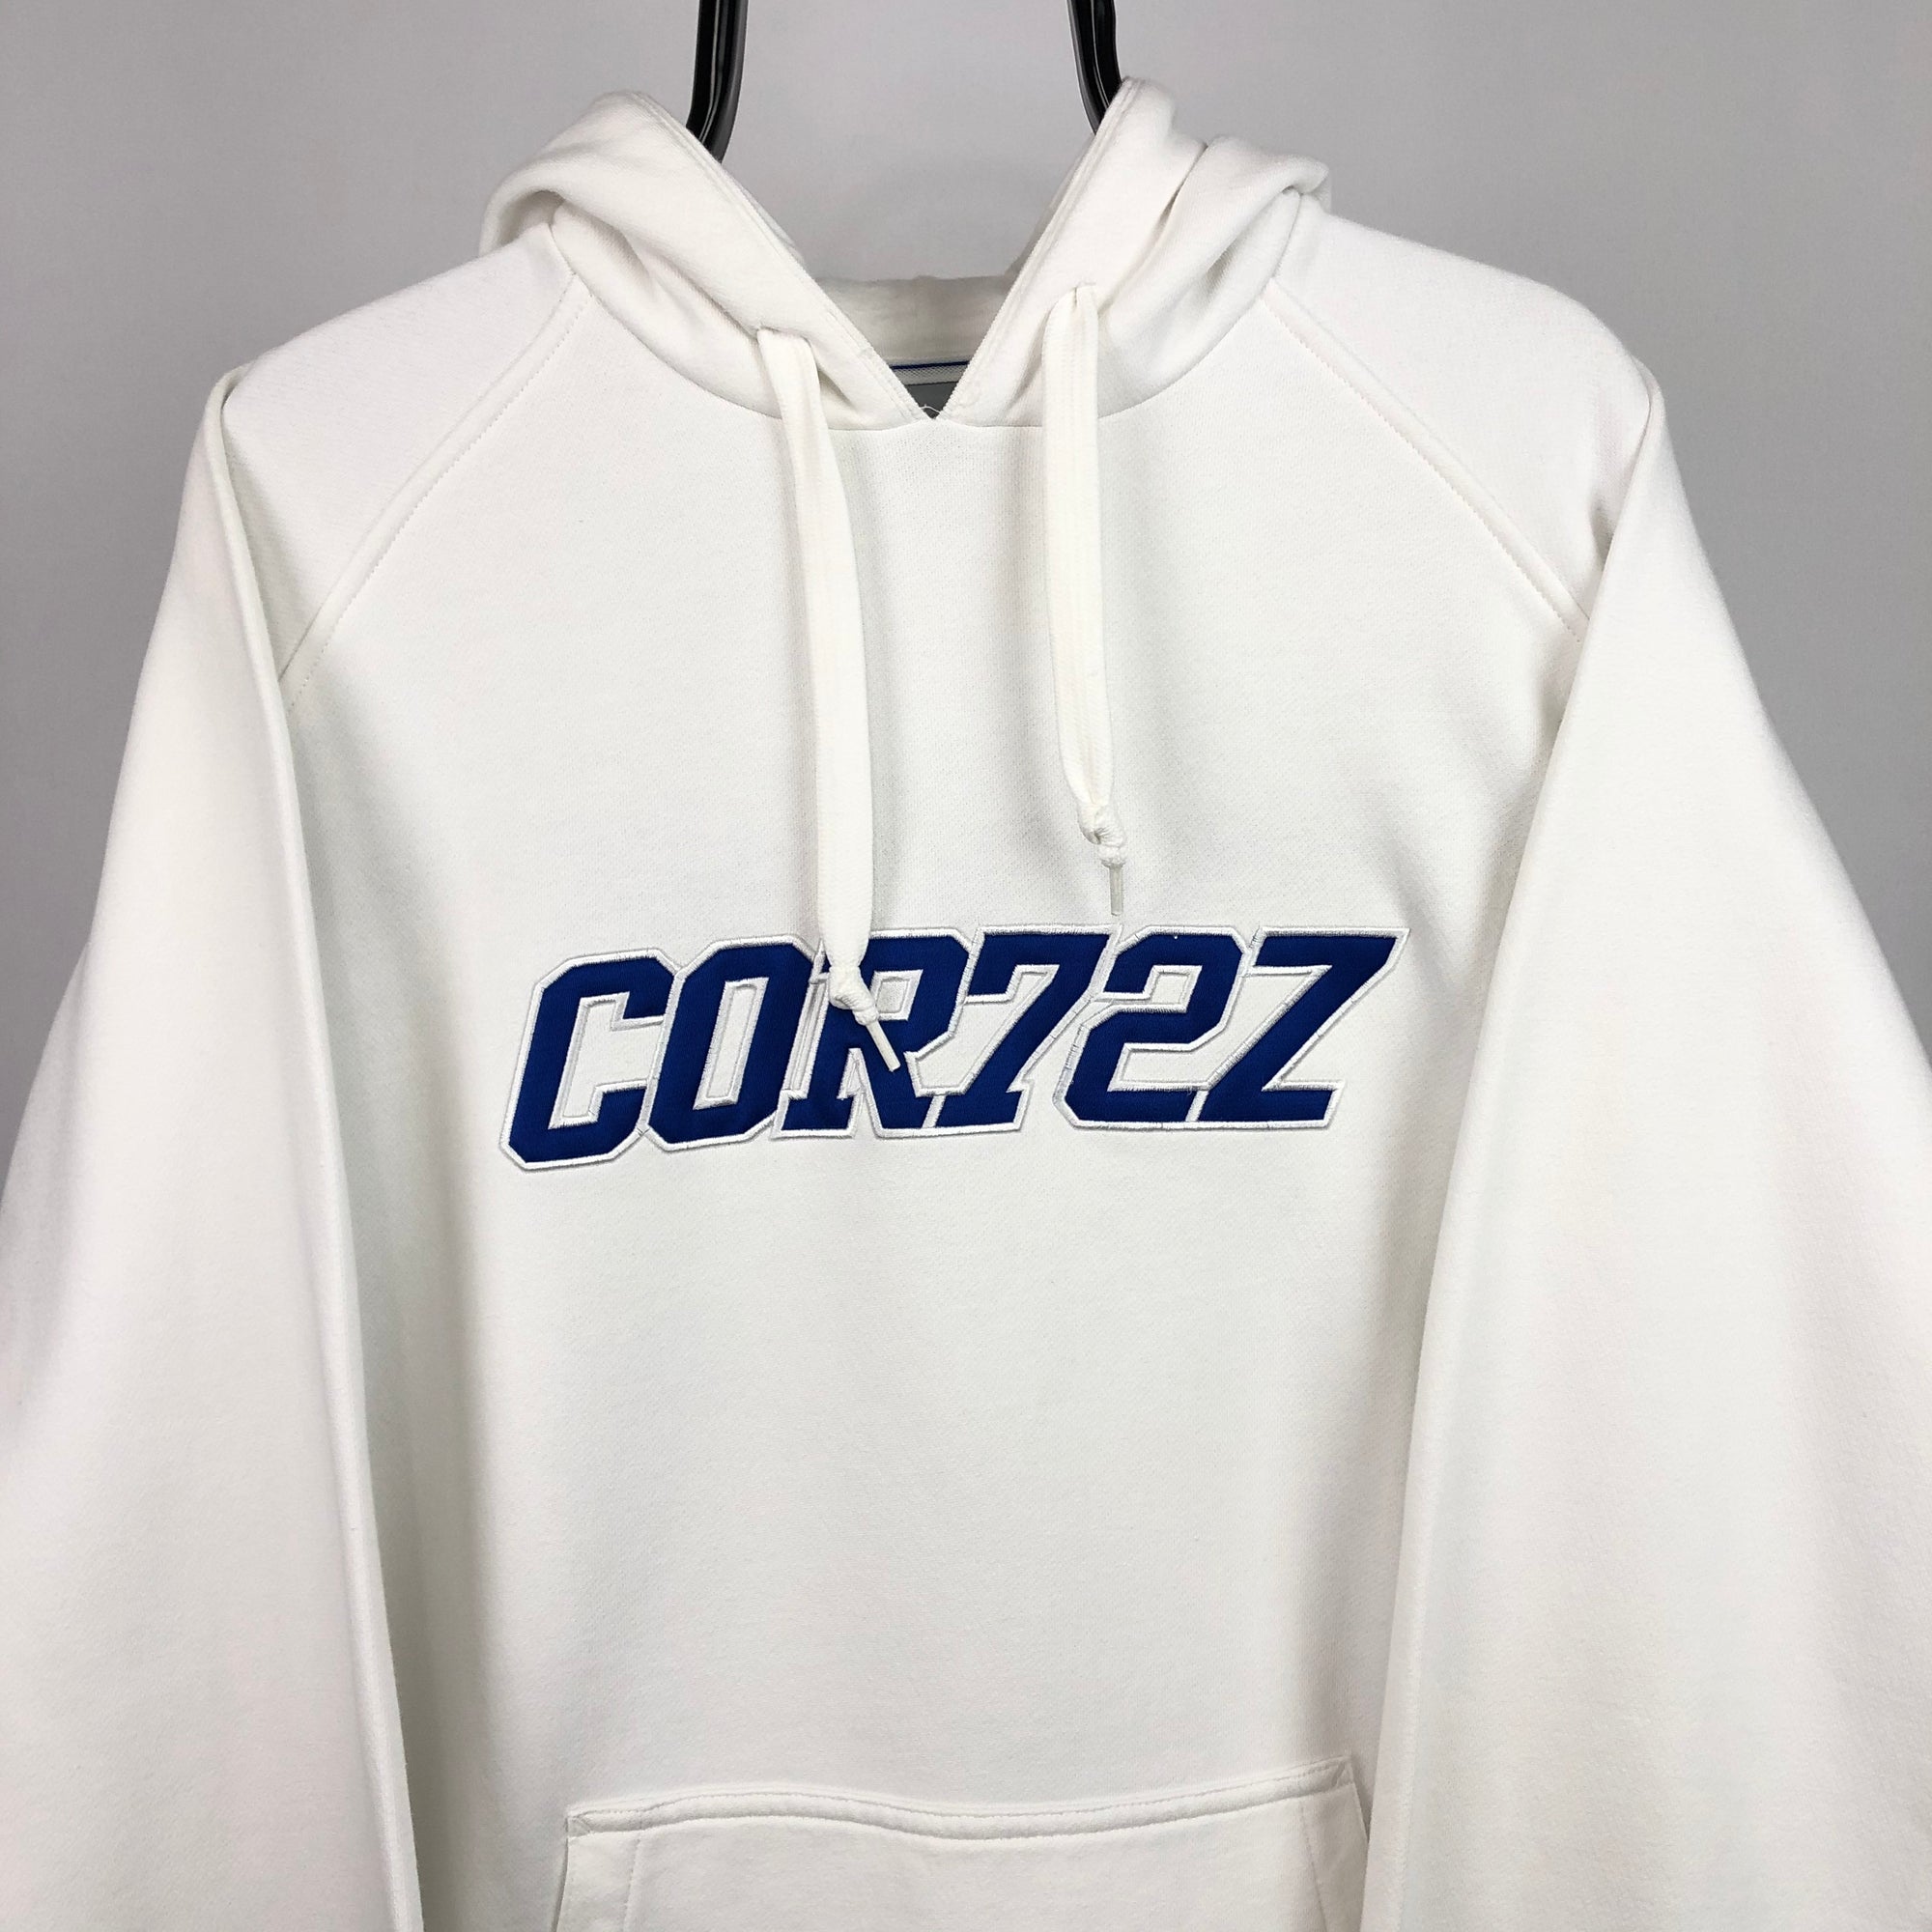 Vintage Nike Cortez Hoodie in White/Royal Blue - Men's Large/Women's XL